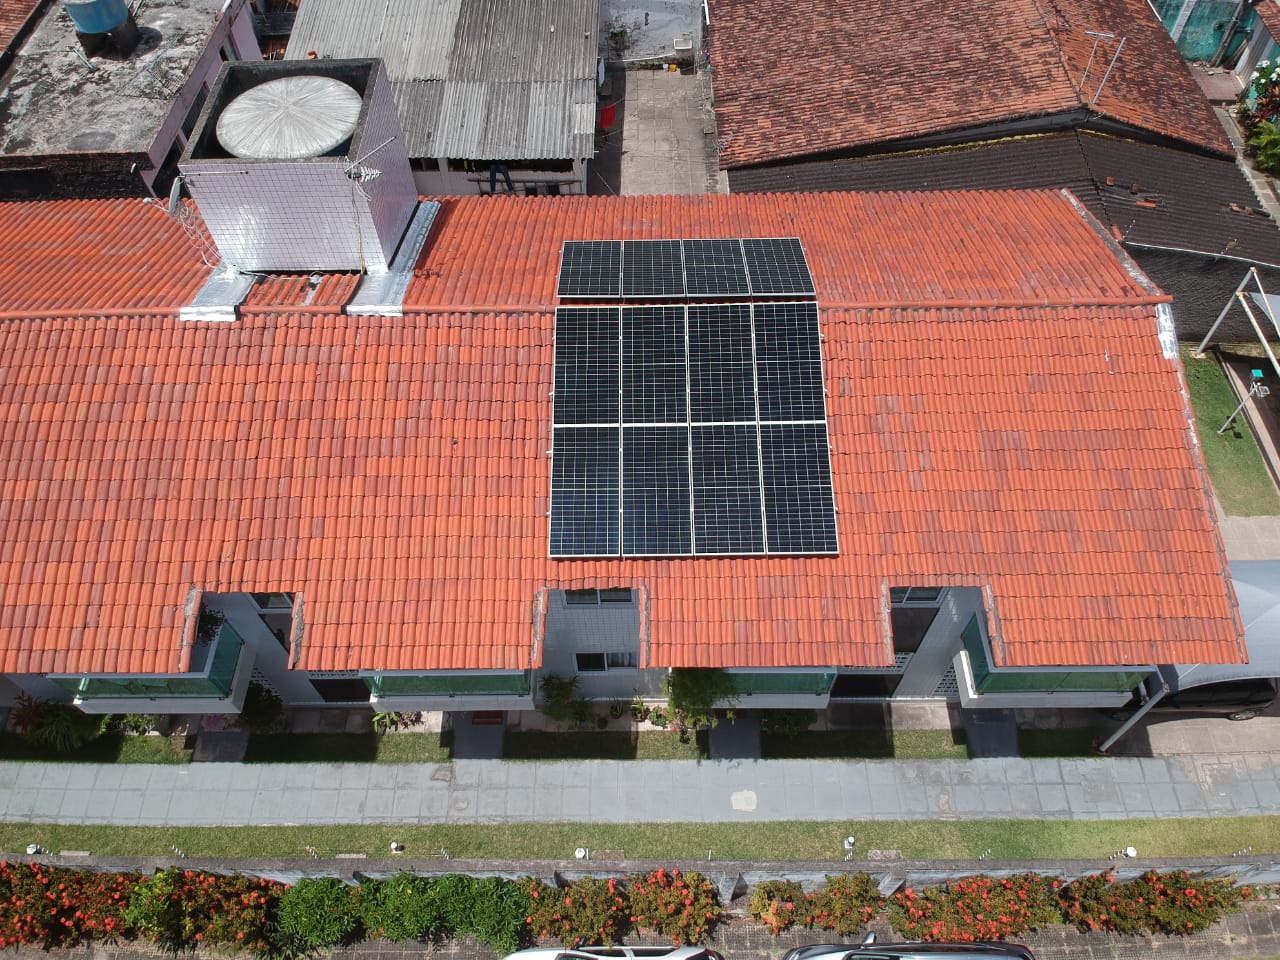 Sistema instalado no bairro da Varzea, Recife-PE. Composto por 12 módulos Solar Fotovoltaico de potência 425Wp e Micro inversor APSystems. Com plataforma para monitoramento Online nivel módulo a módulo.